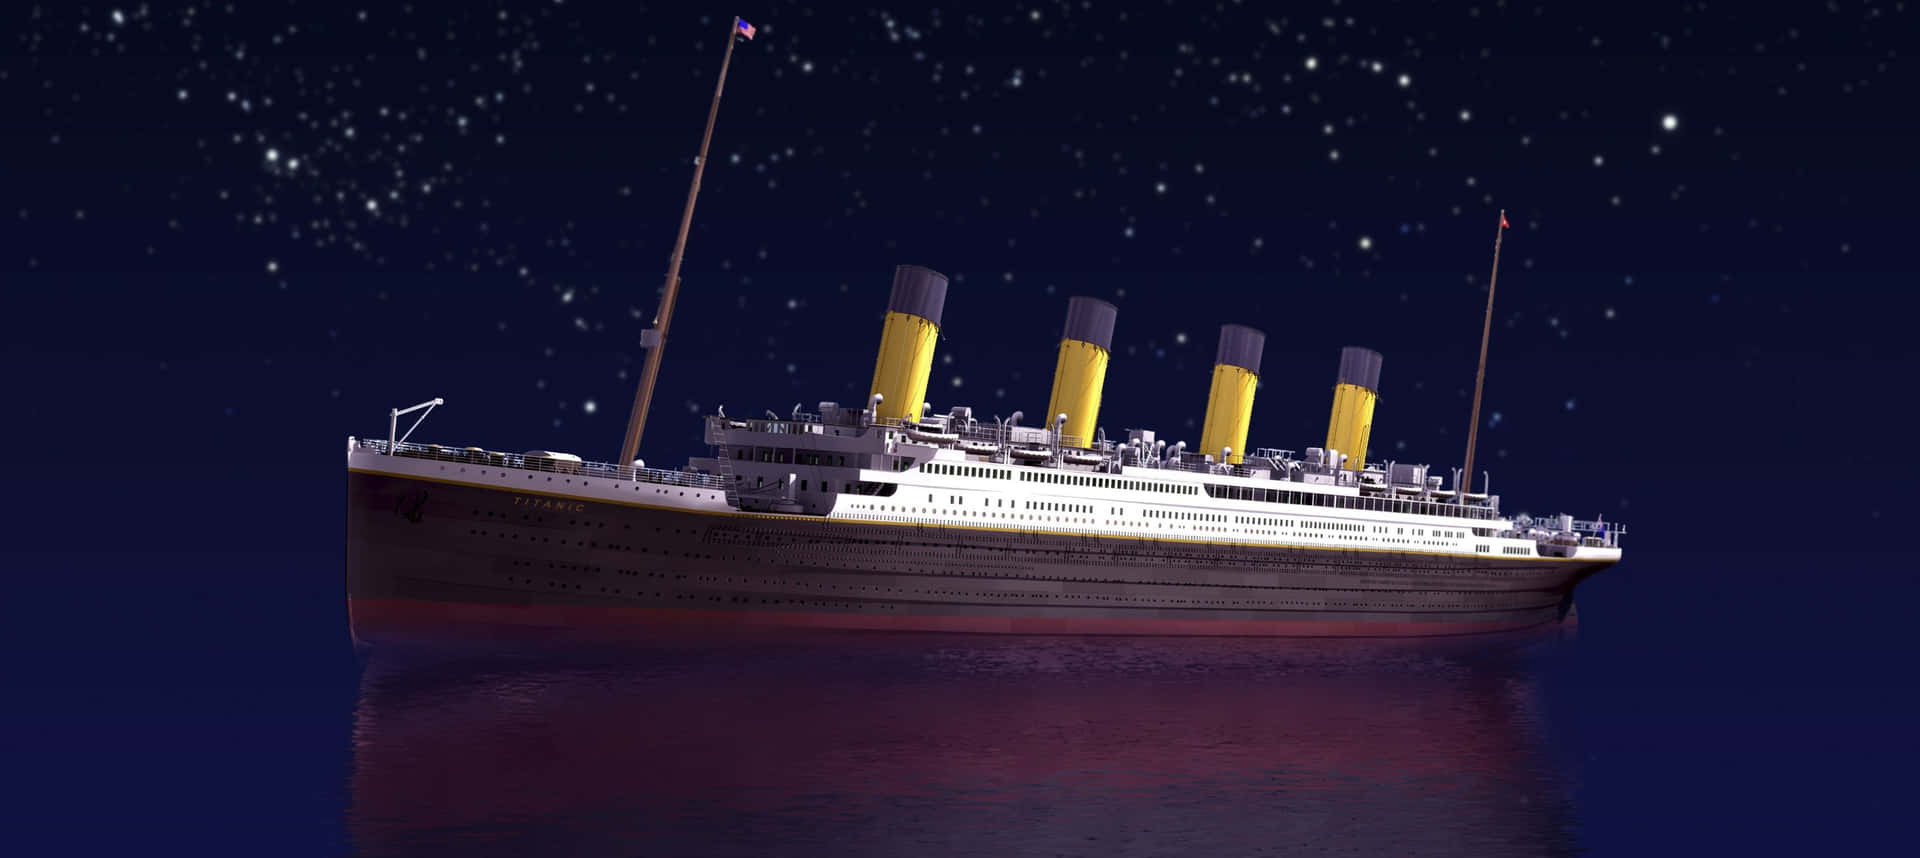 Titanic's Final Moments: A Glimpse Into History